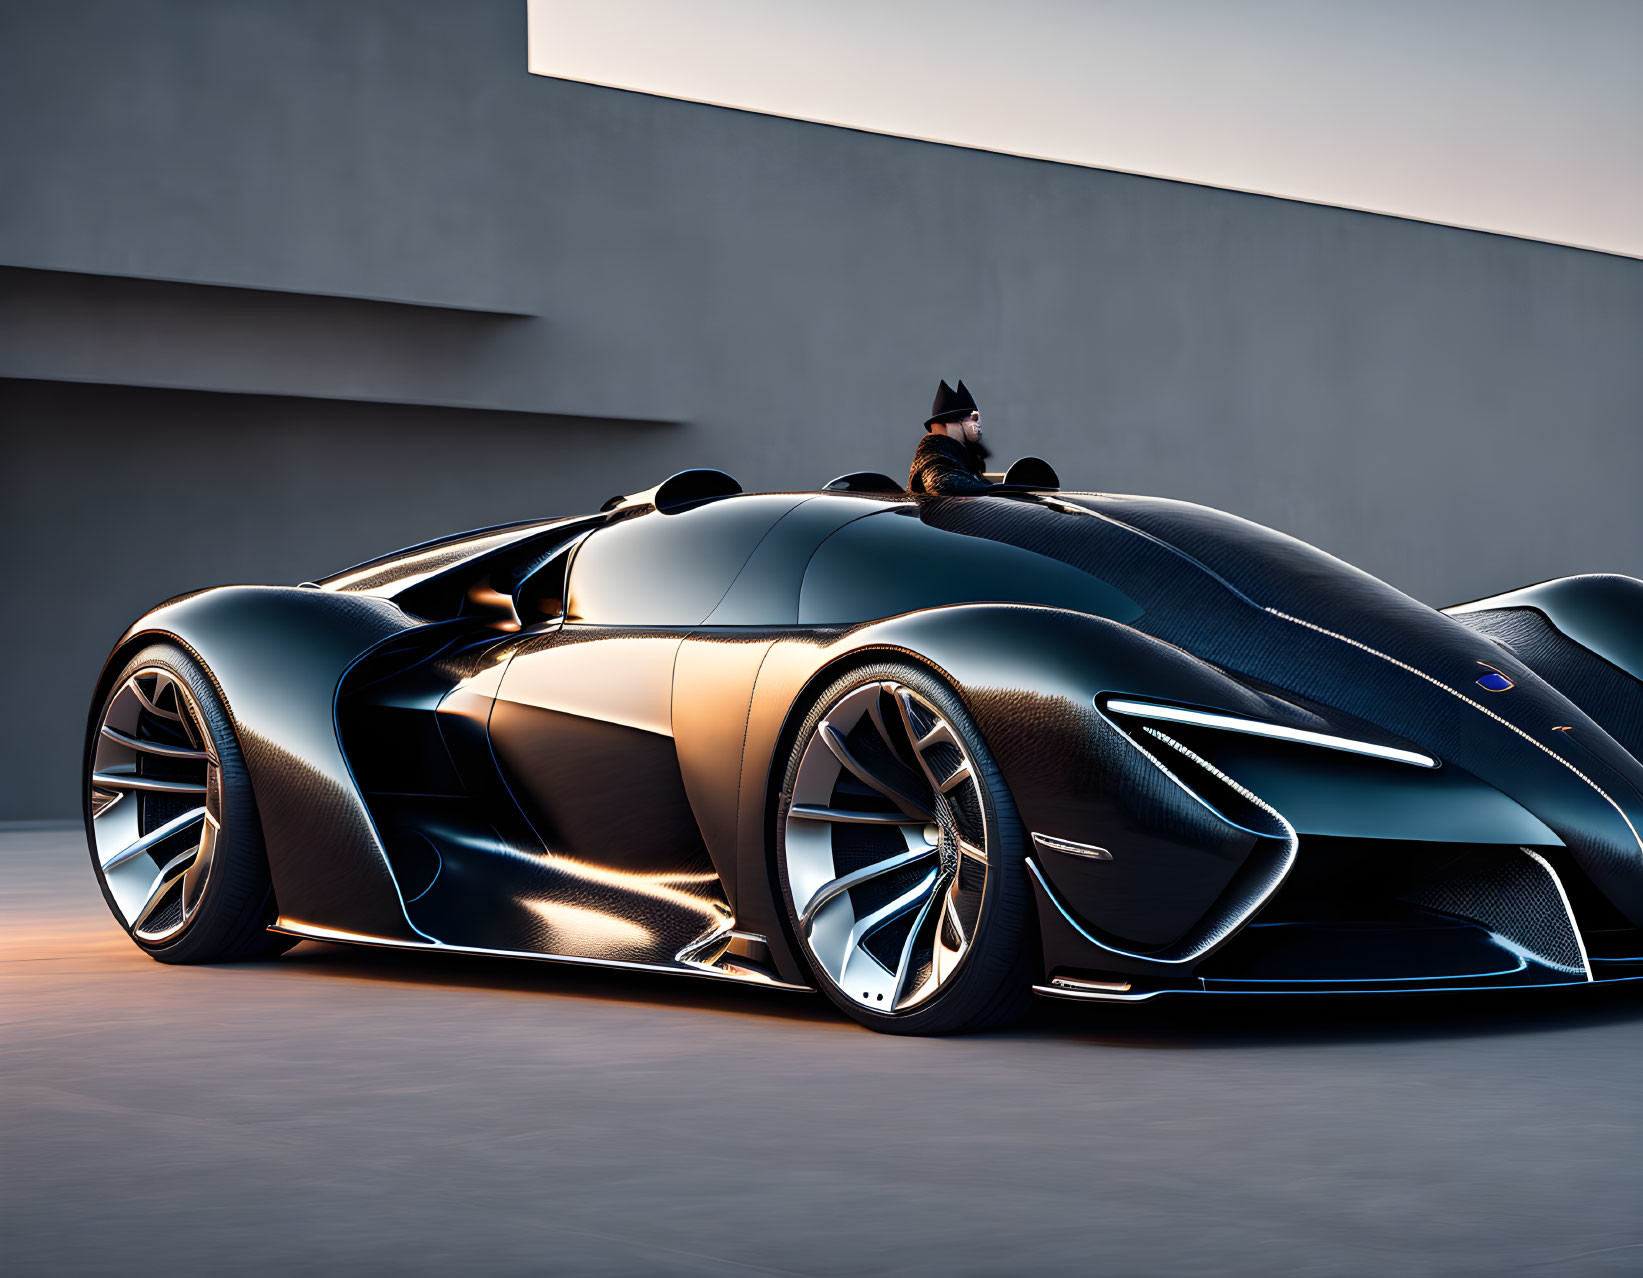 Futuristic black supercar with aerodynamic curves in minimalistic twilight setting